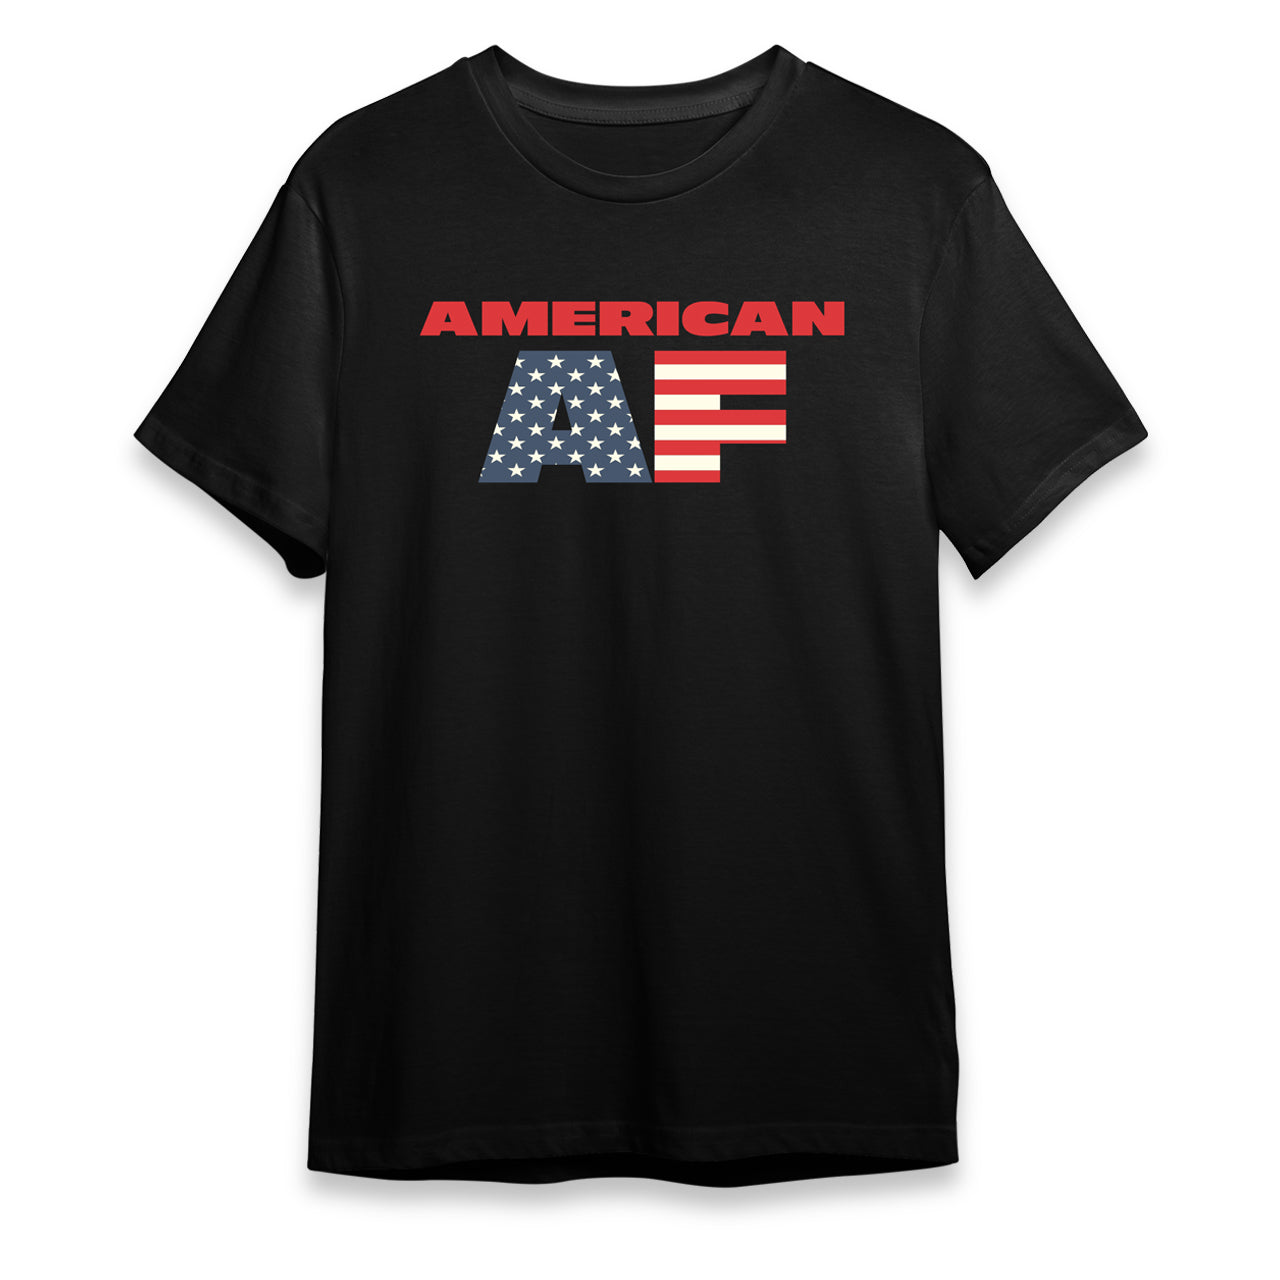 American AF Shirt